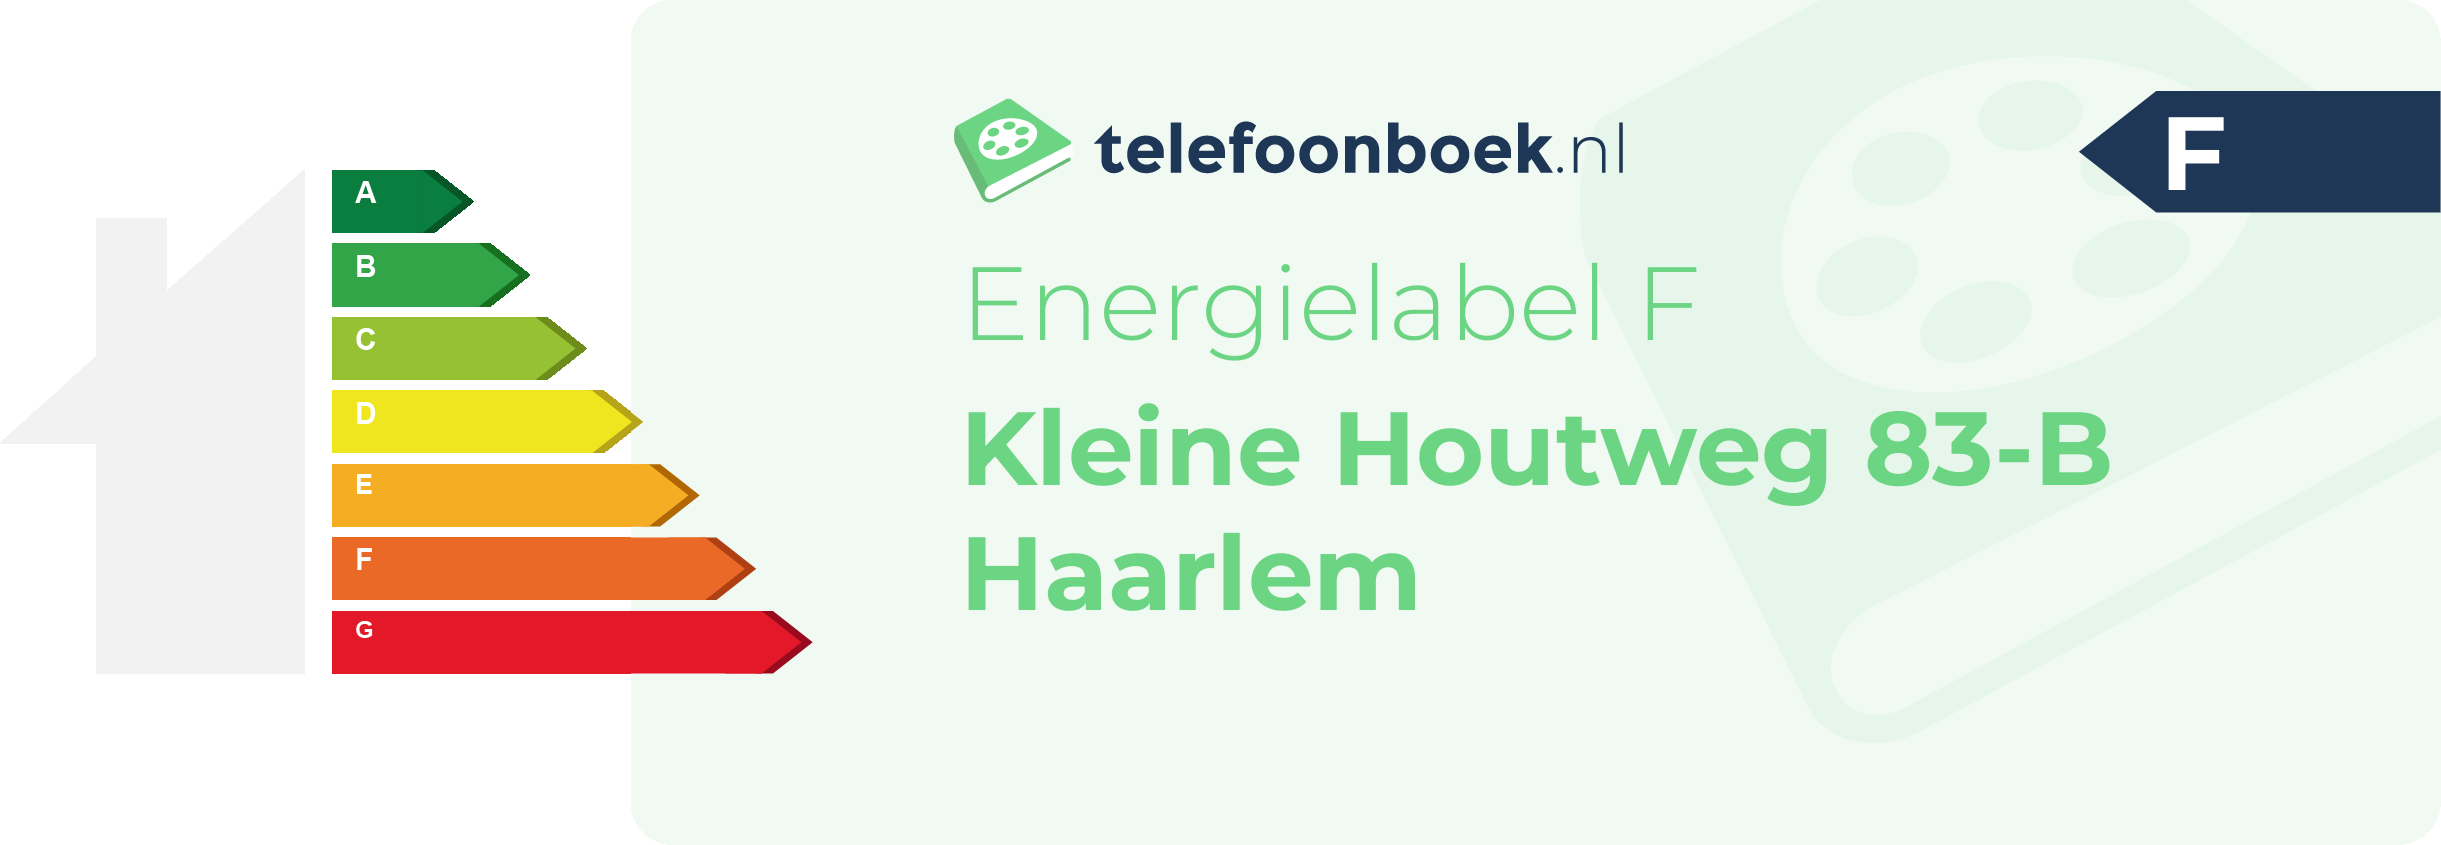 Energielabel Kleine Houtweg 83-B Haarlem